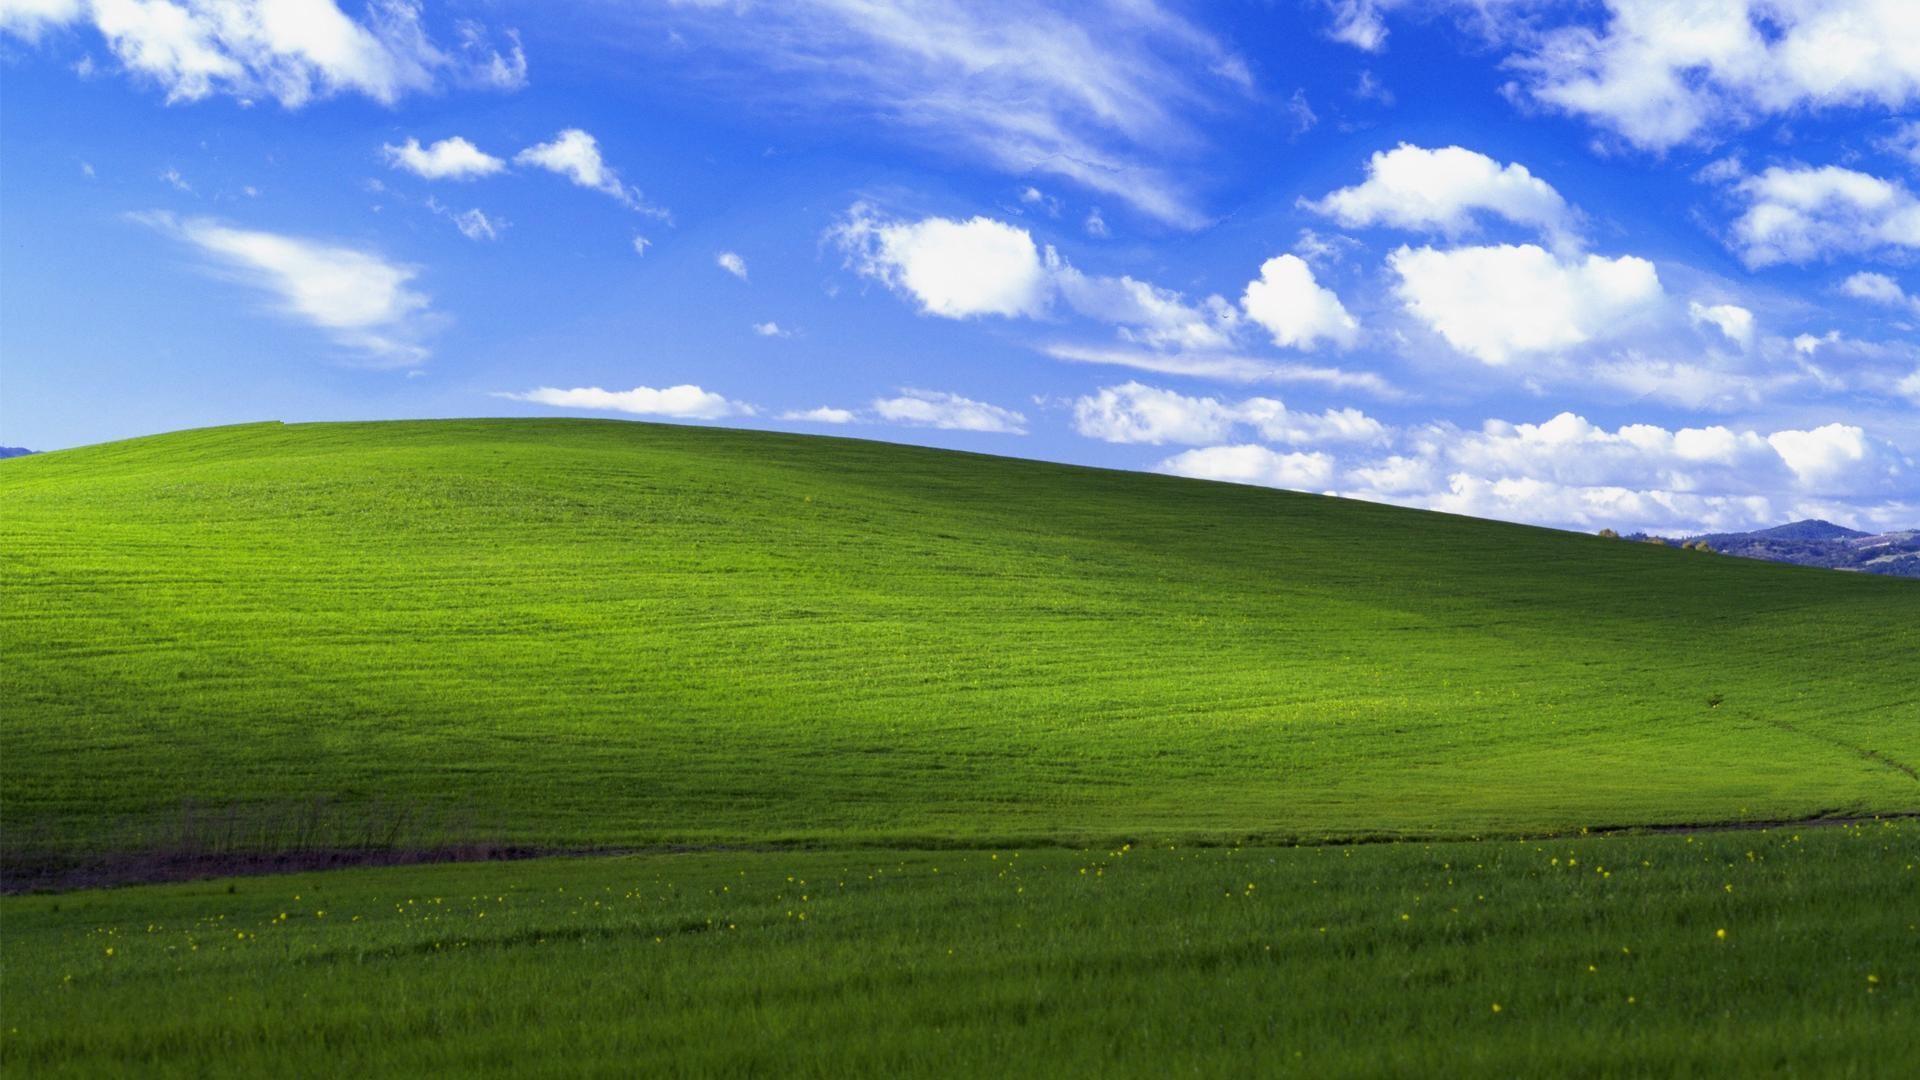 Cool Windows XP Wallpaper In HD For Free Download. wallpaper